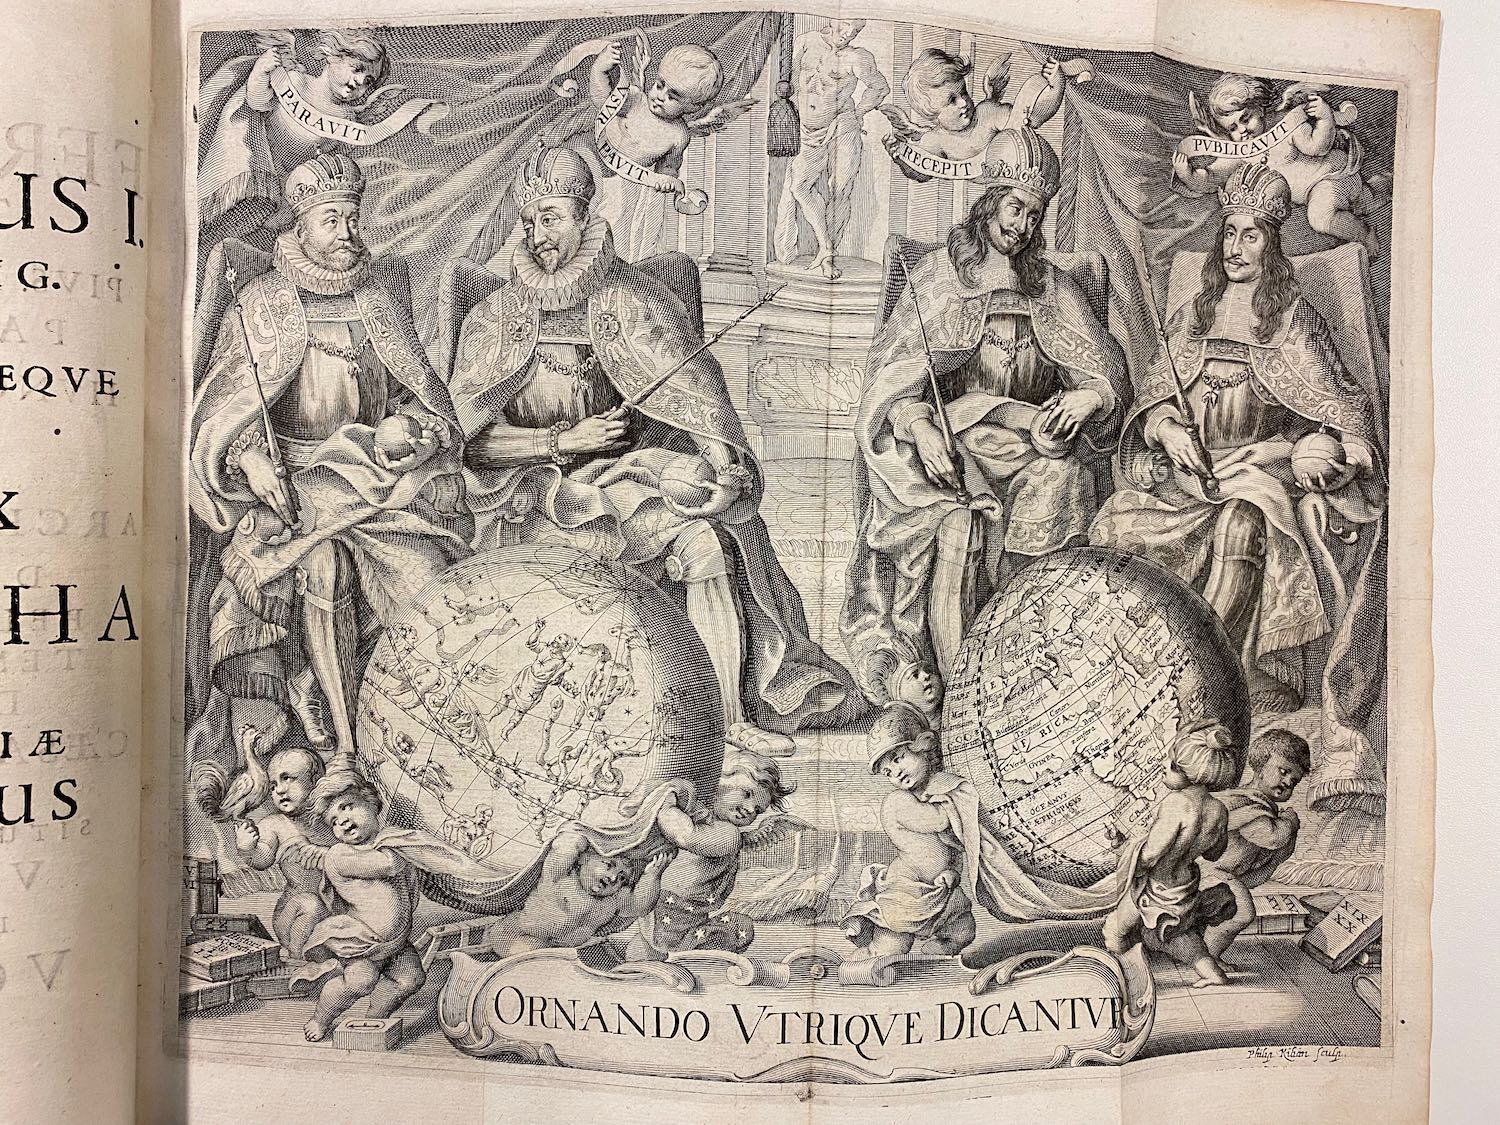 Je bekijkt nu Observationum Tychonis Brahe – 1618 INGEZIEN